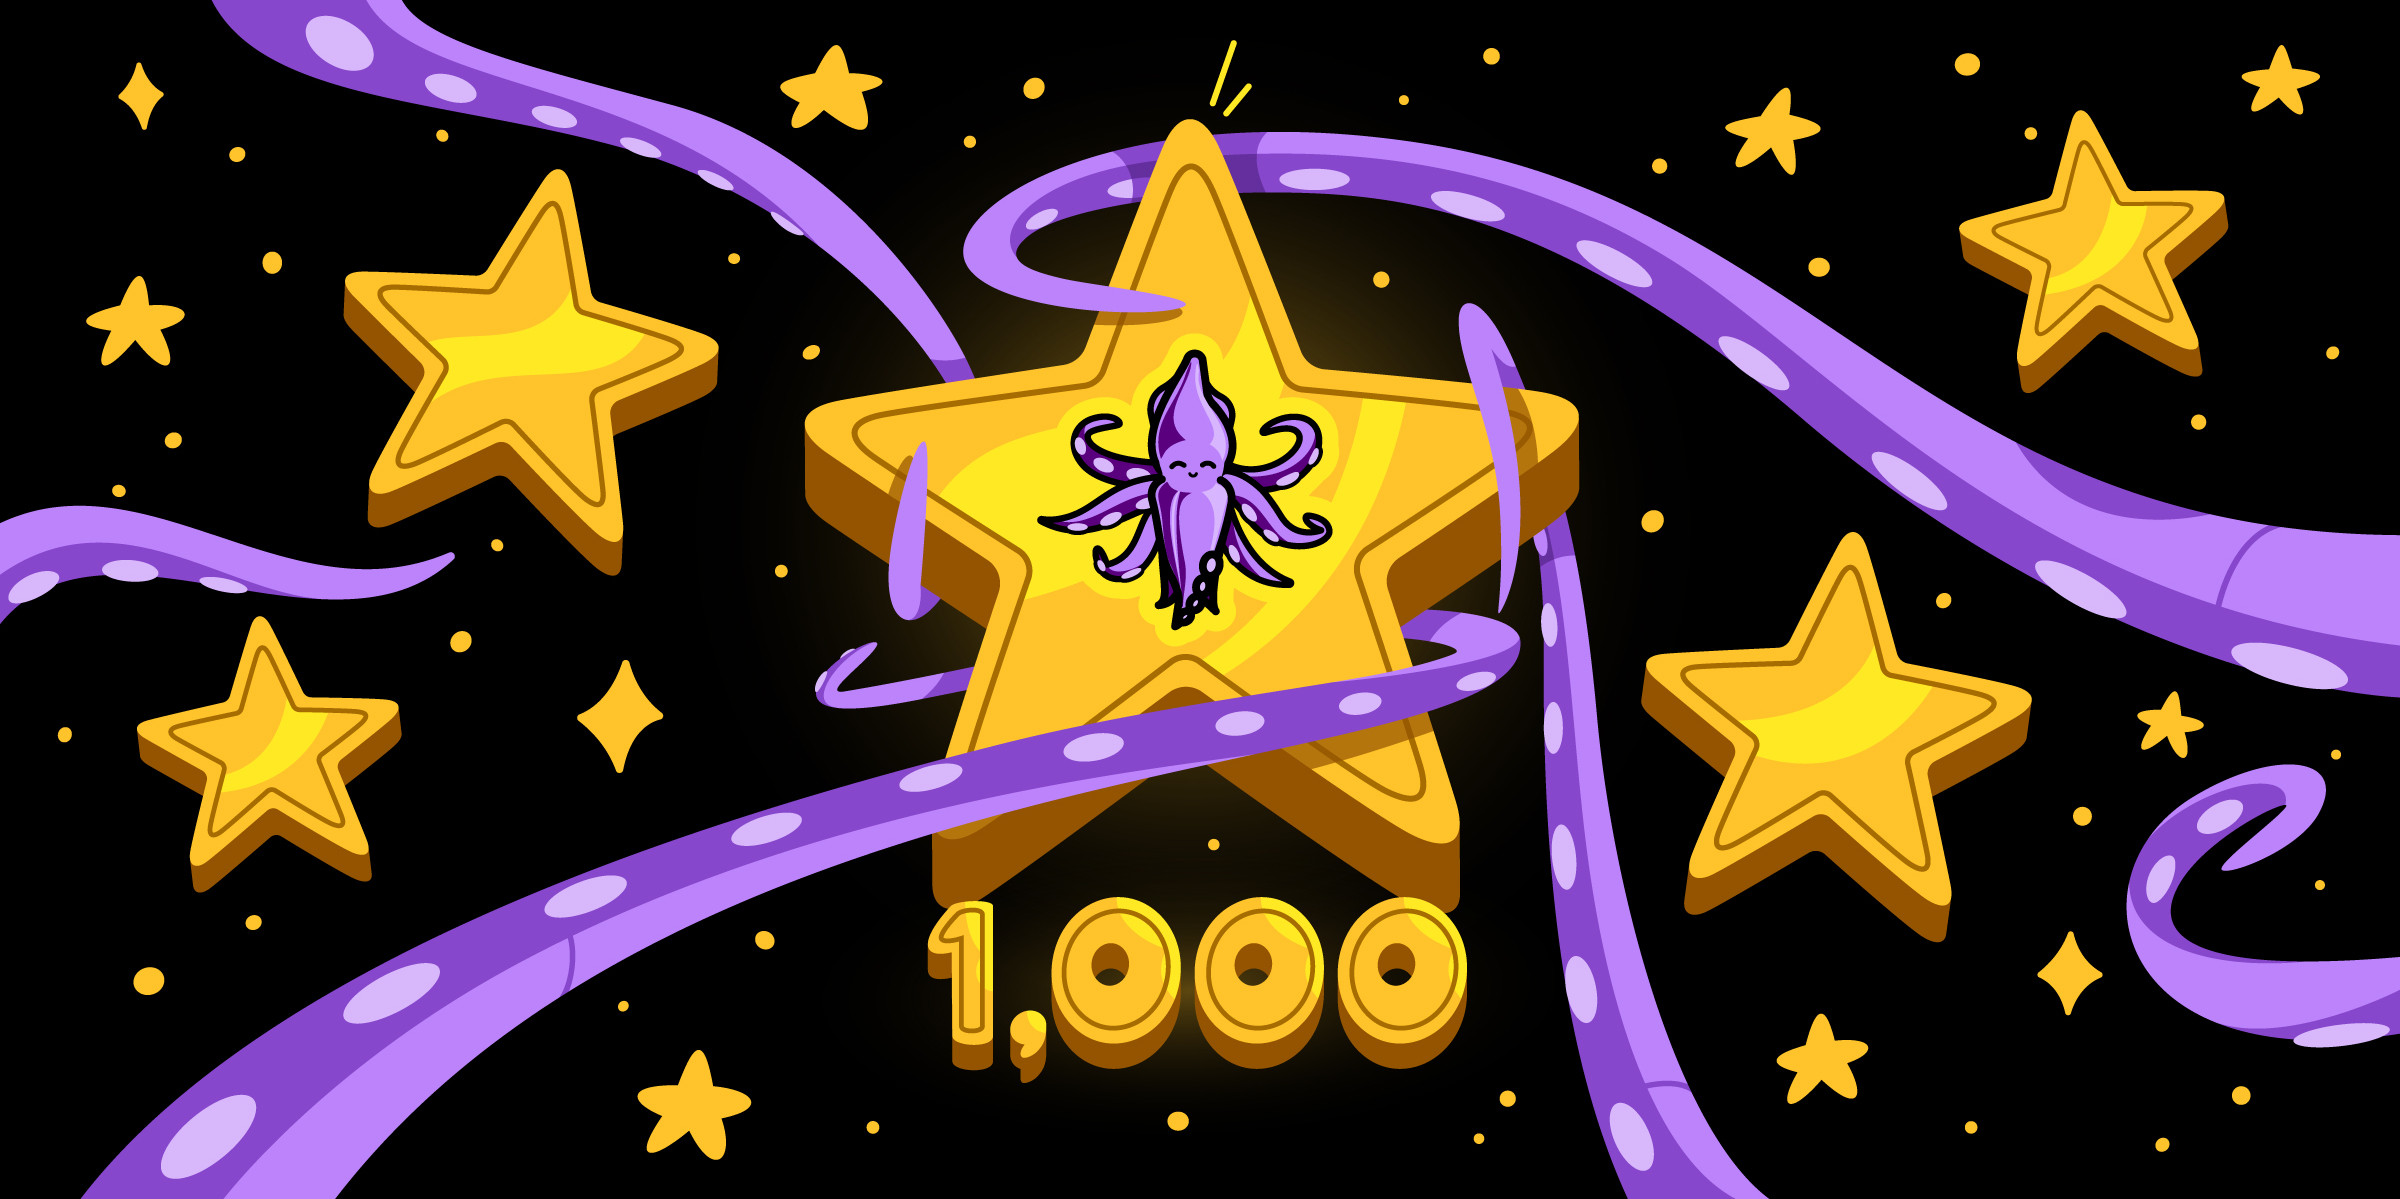 One thousand ink! GitHub stars